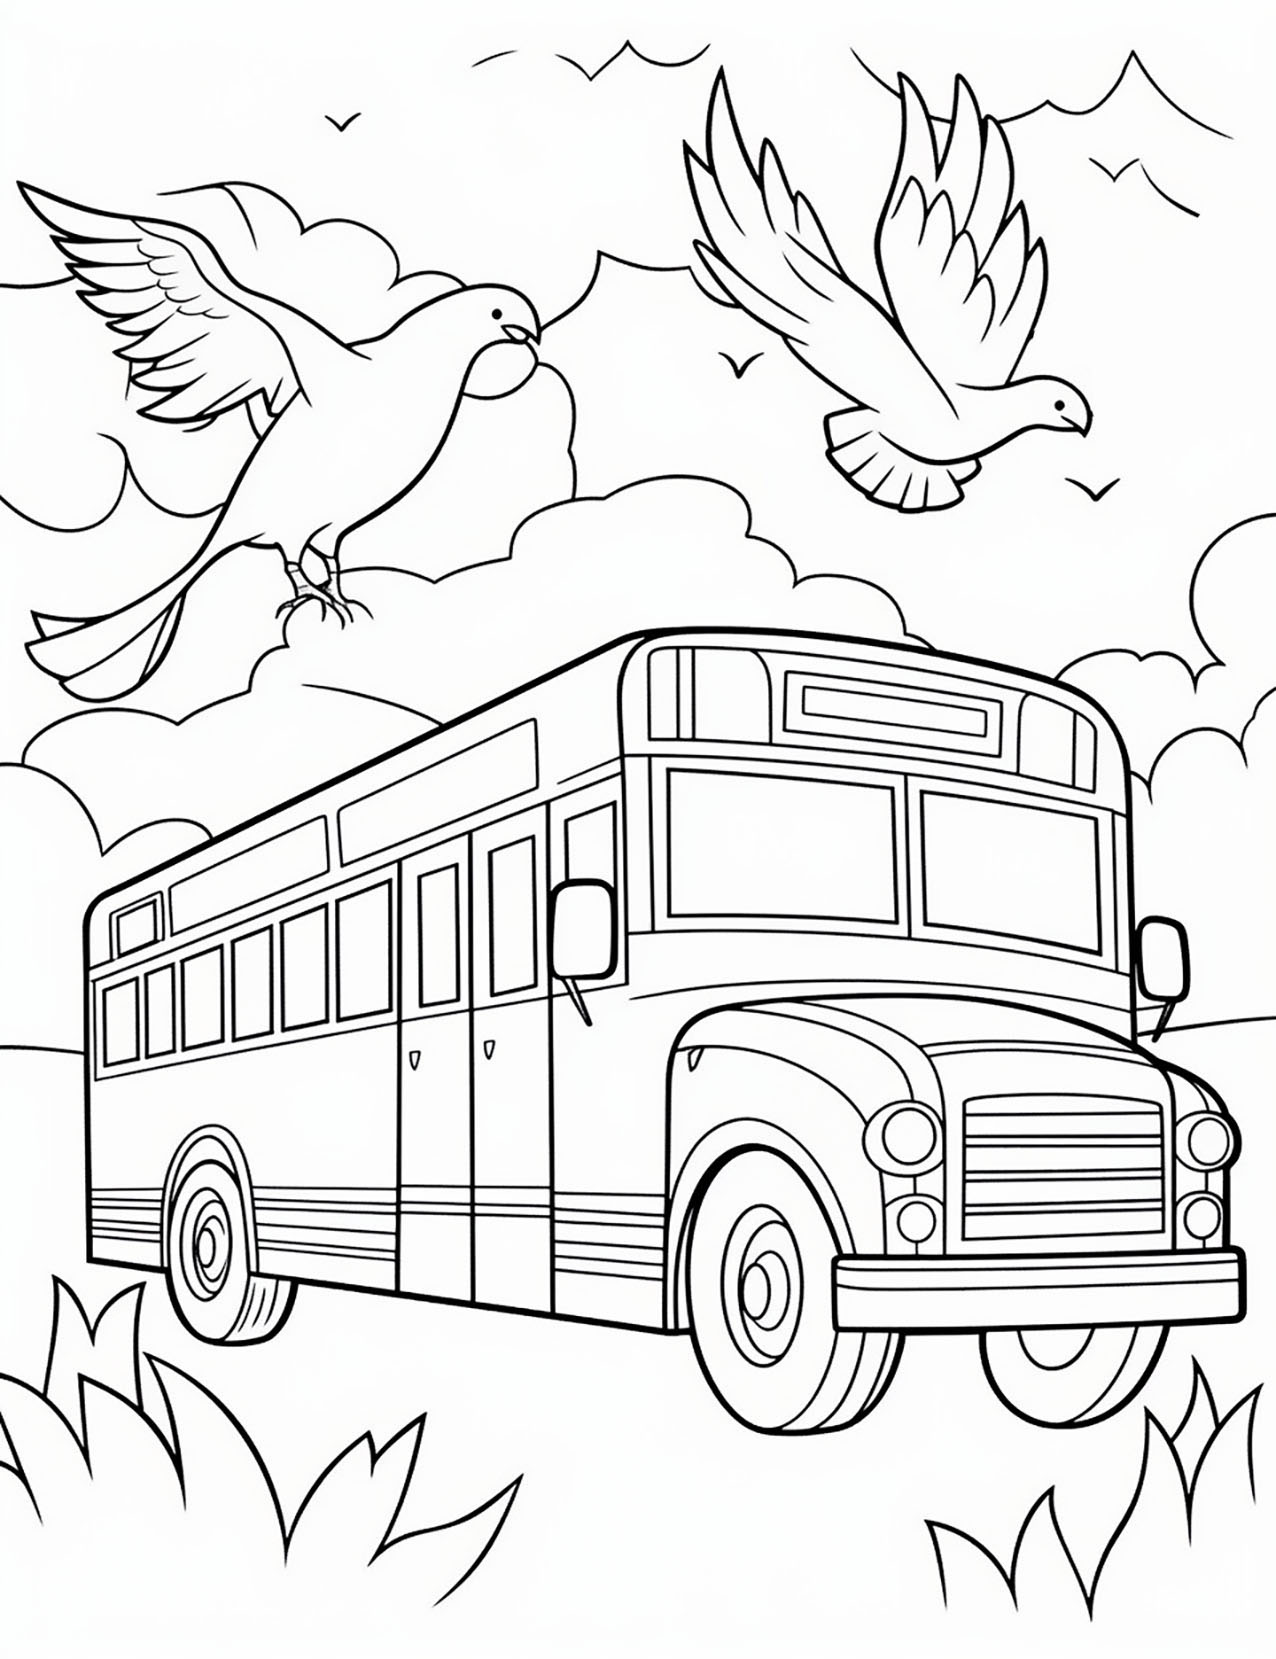 Unique school bus coloring pages free printable